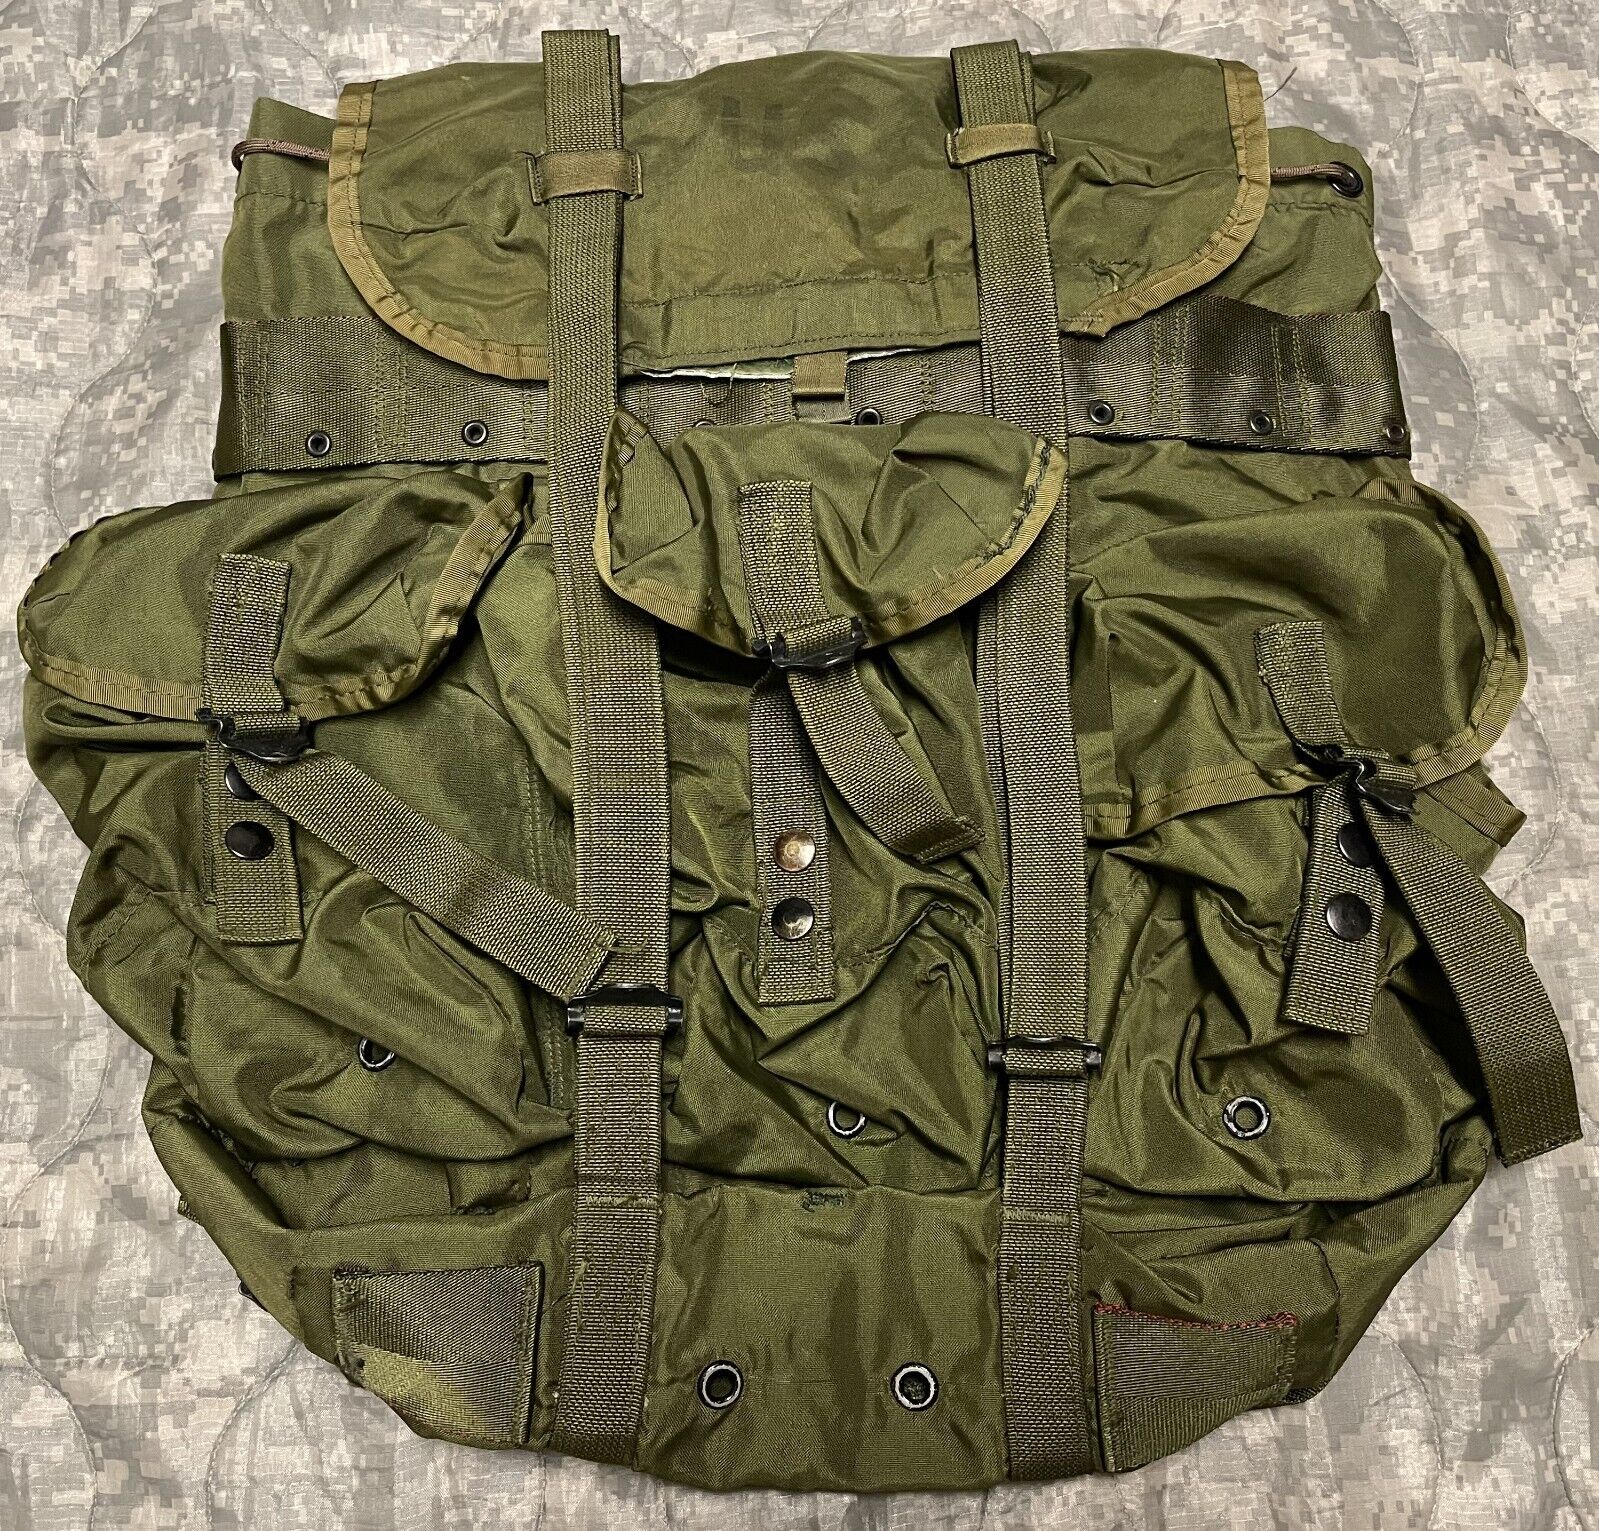 GENUINE USGI Military MEDIUM FIELD COMBAT ALICE PACK Backpack Rucksack VGC